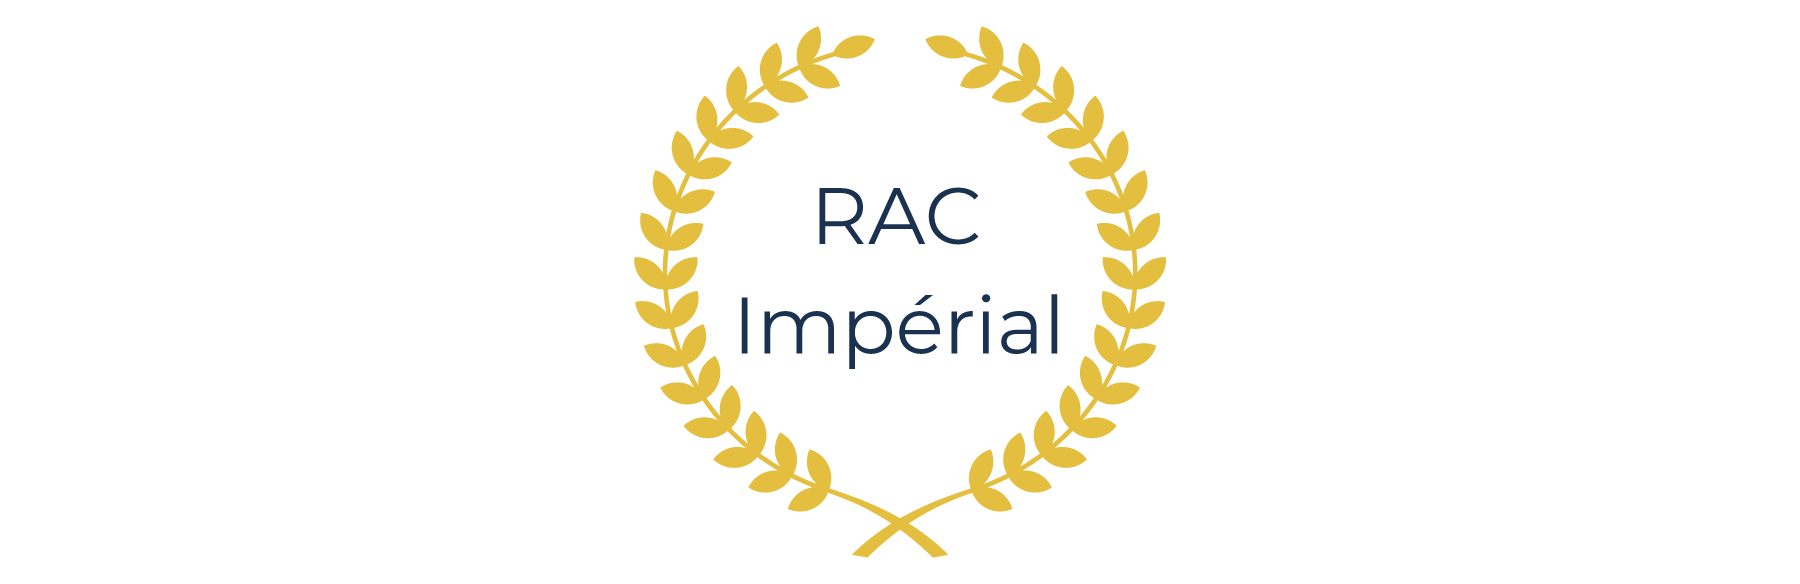 header-rac-imperial